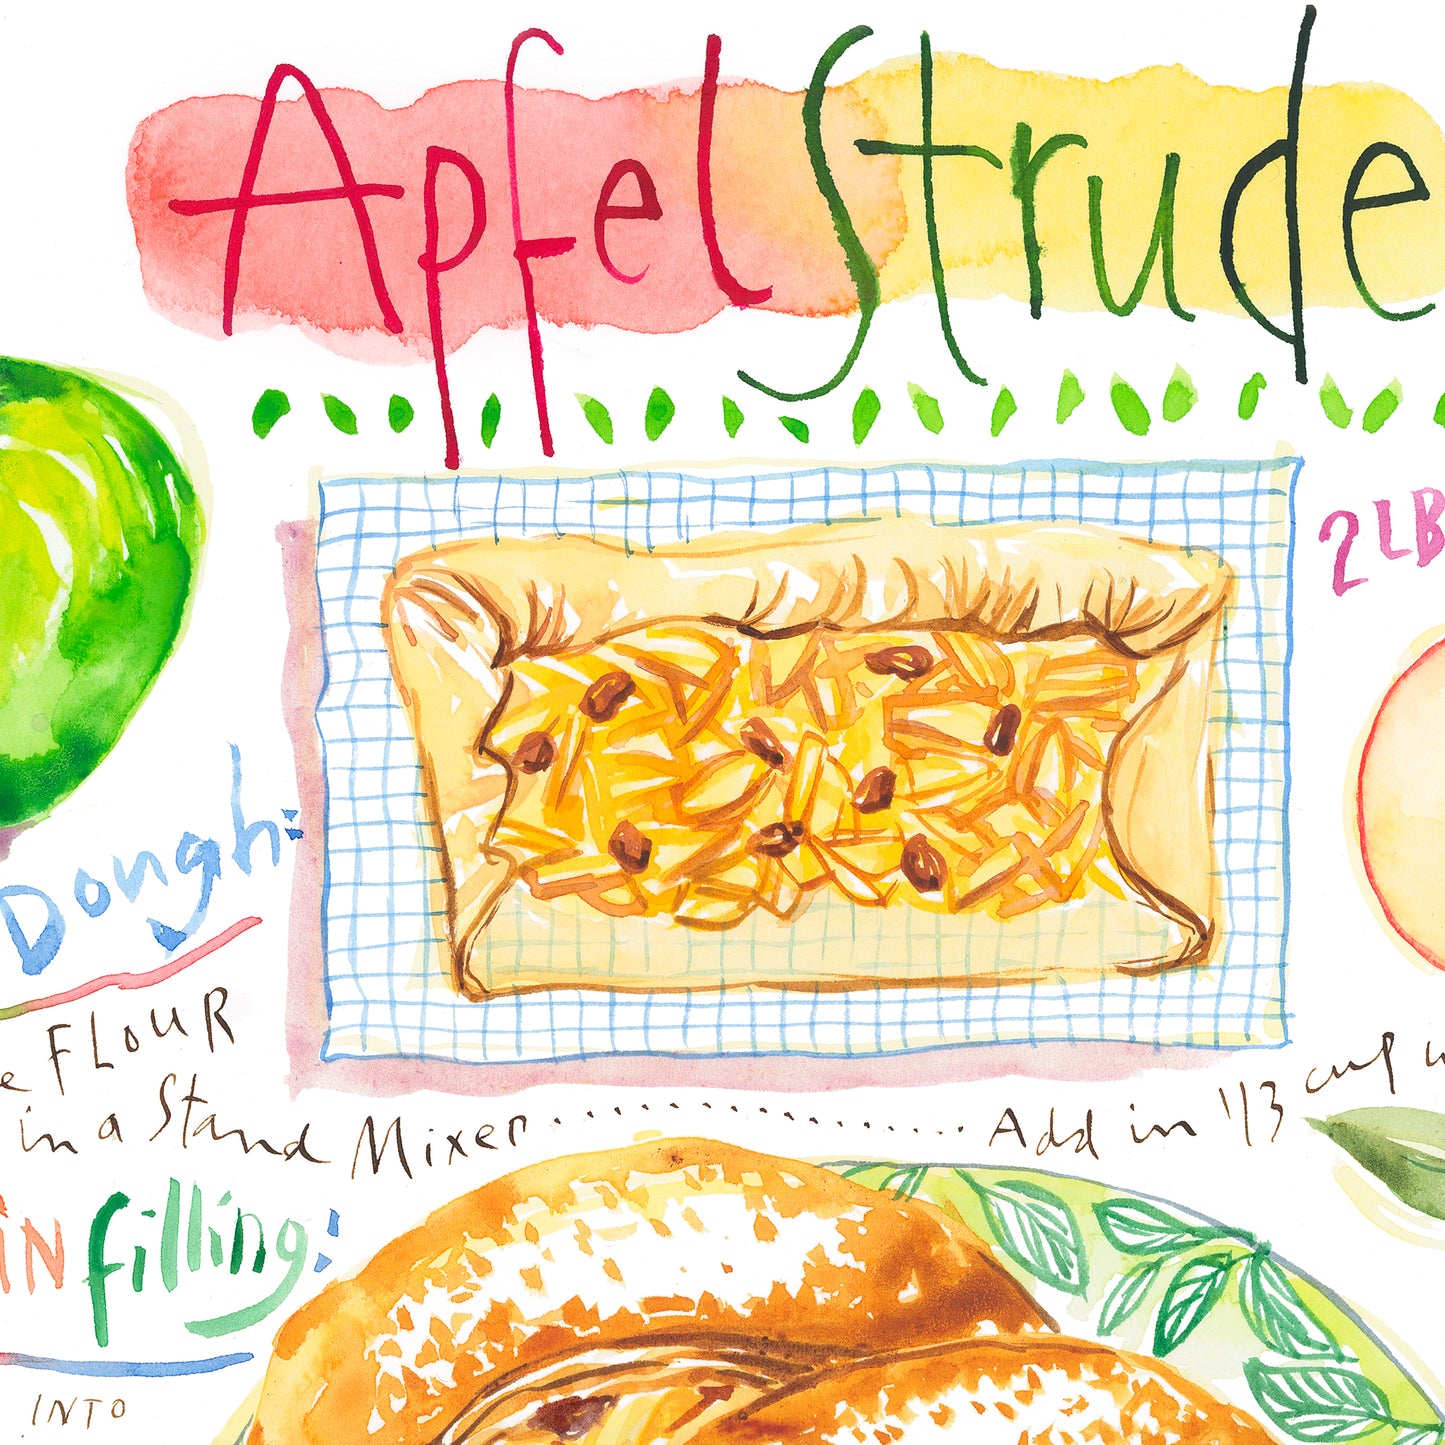 Apple Strudel recipe - Apfelstrudel